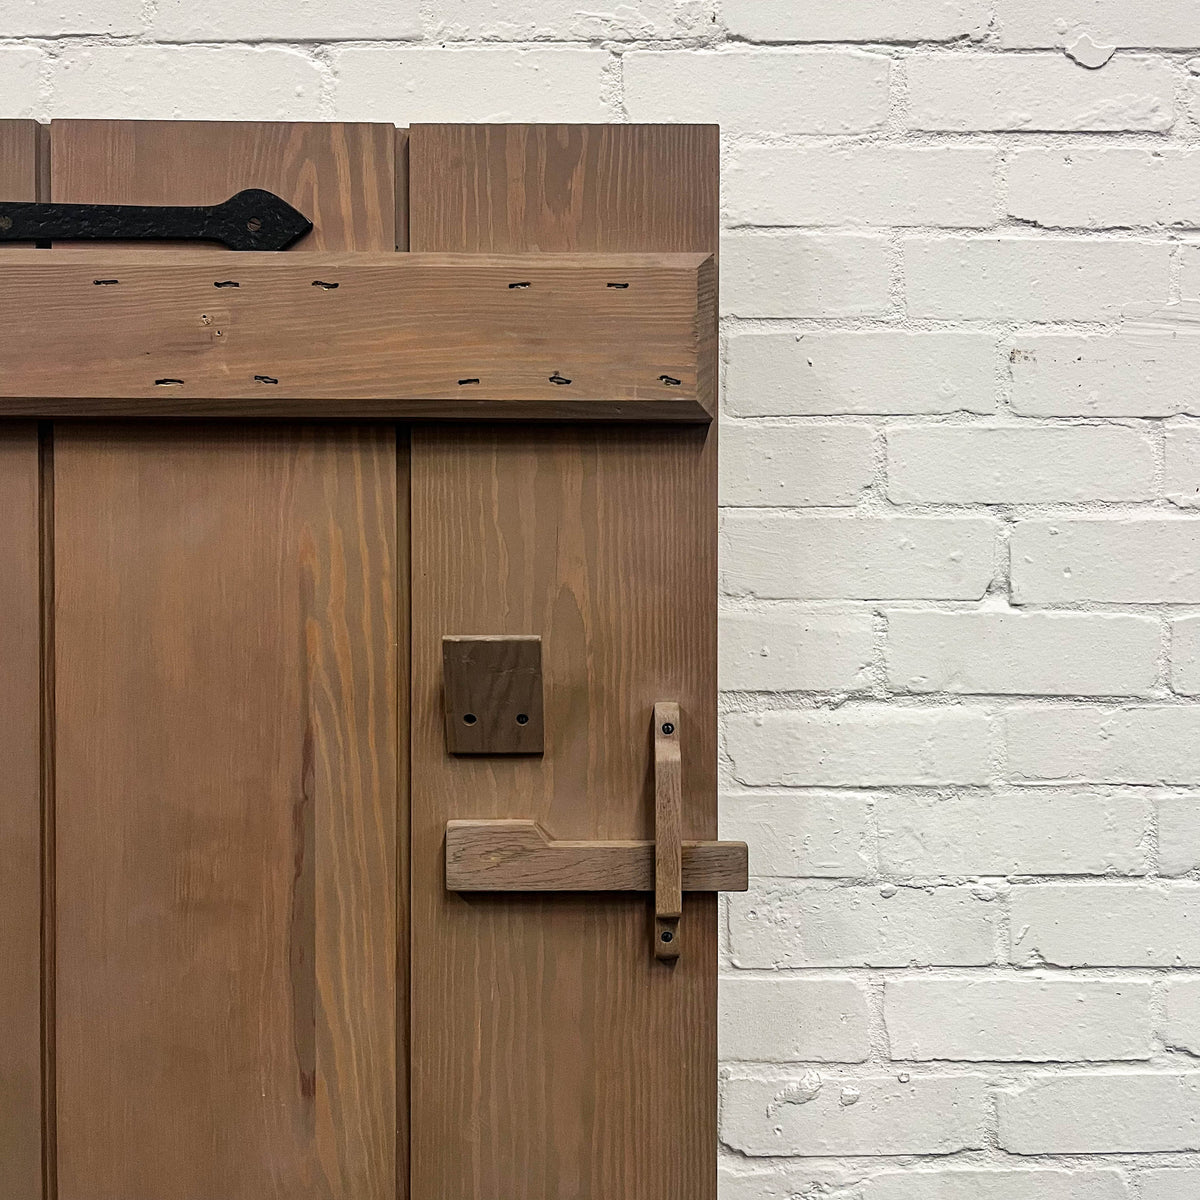 Antique Victorian Pine Latch Door - 193.5cm x 73cm | The Architectural Forum